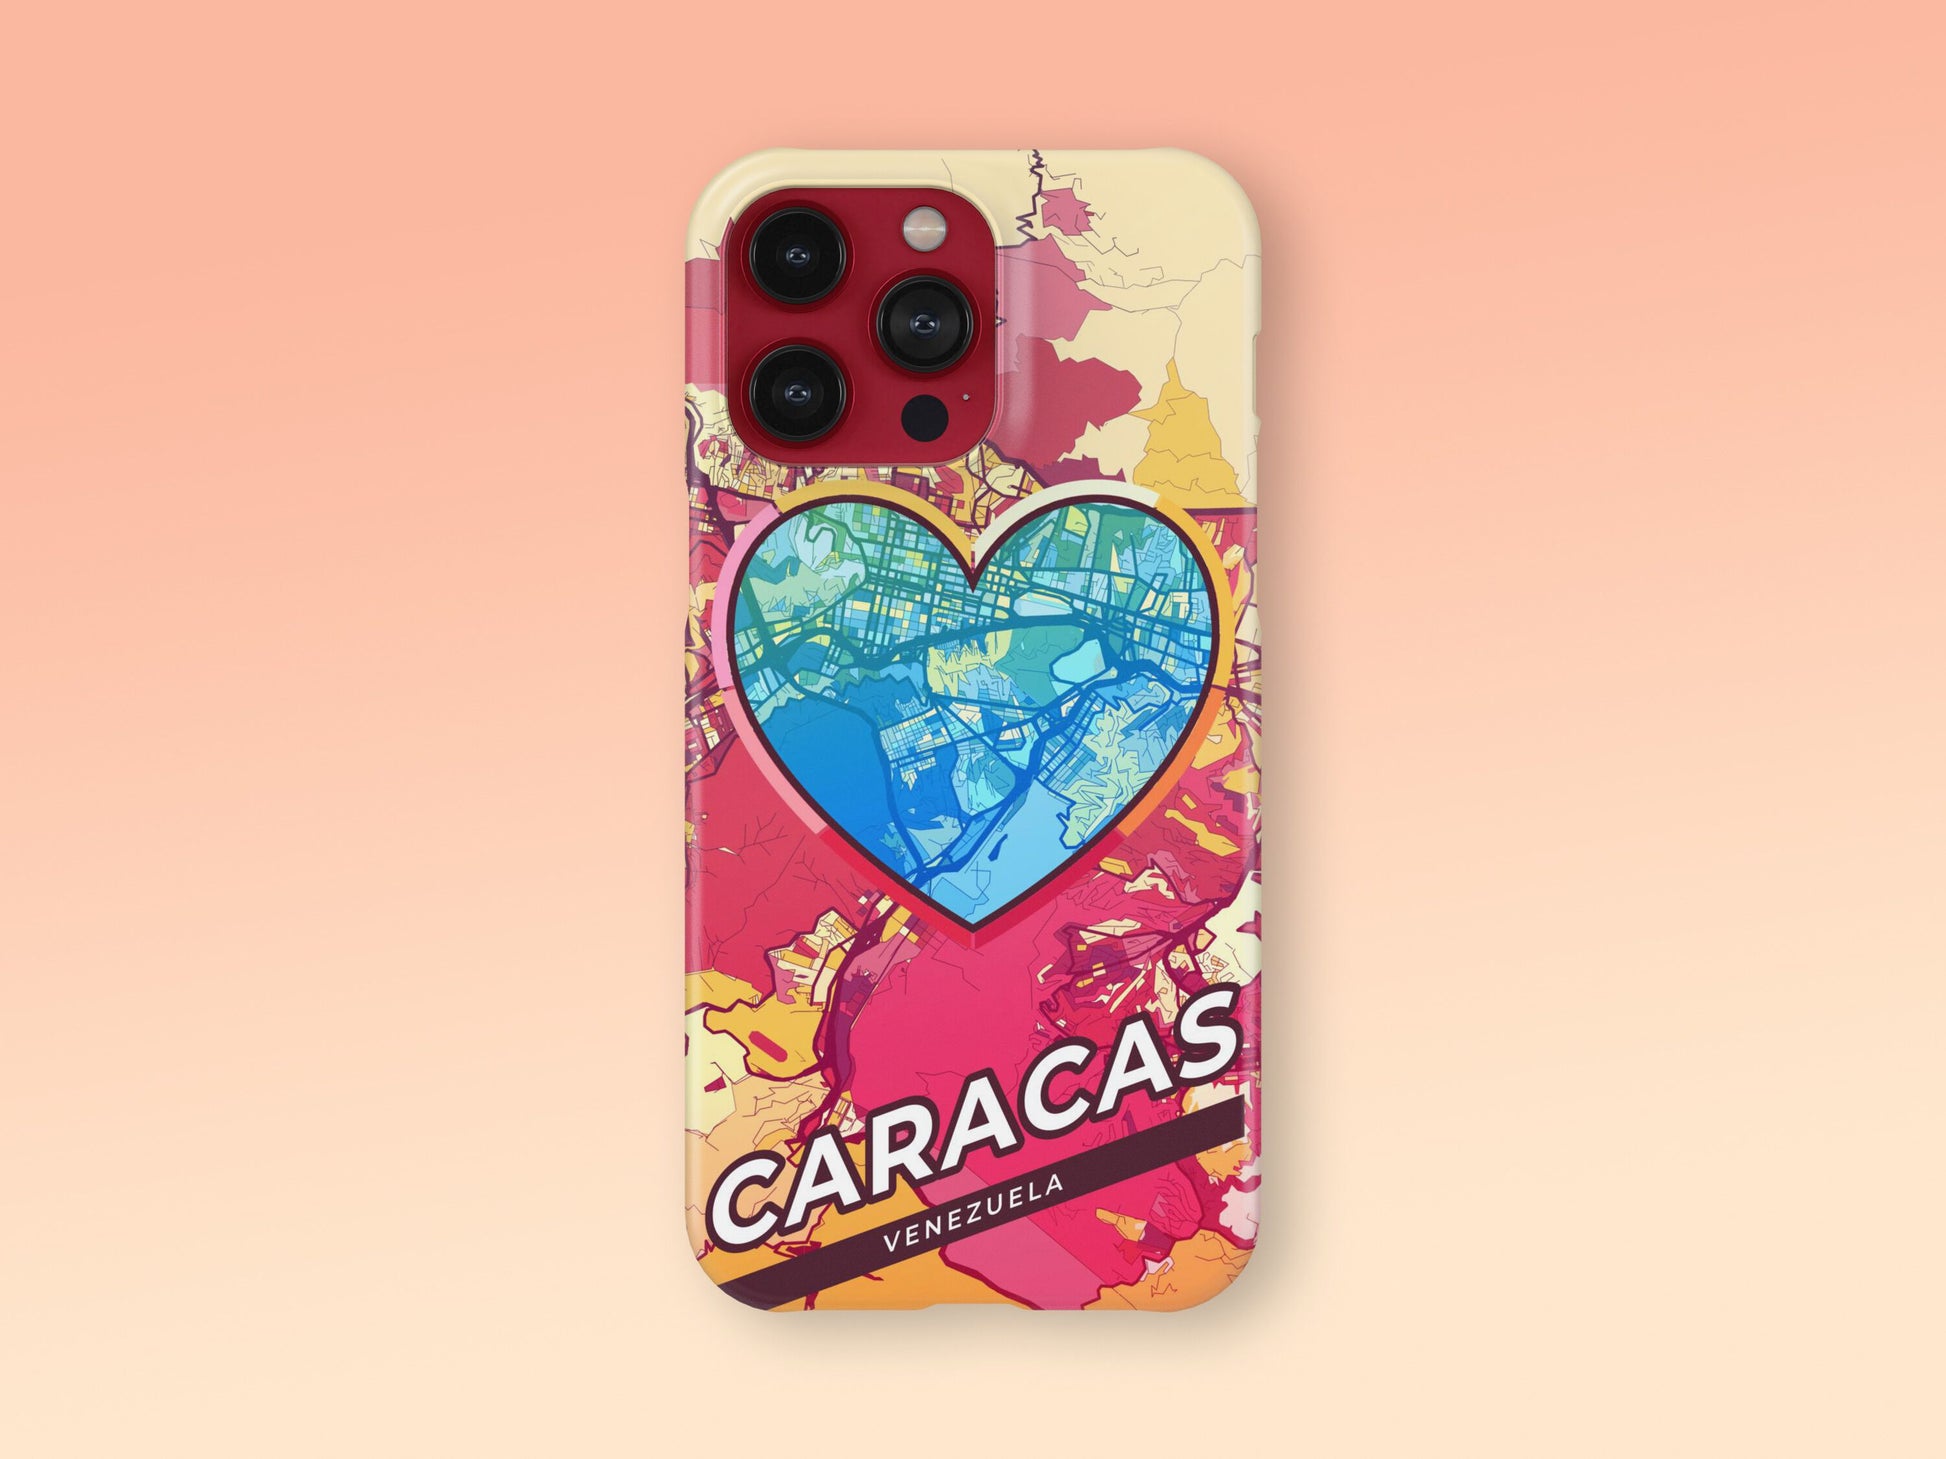 Caracas Venezuela slim phone case with colorful icon. Birthday, wedding or housewarming gift. Couple match cases. 2